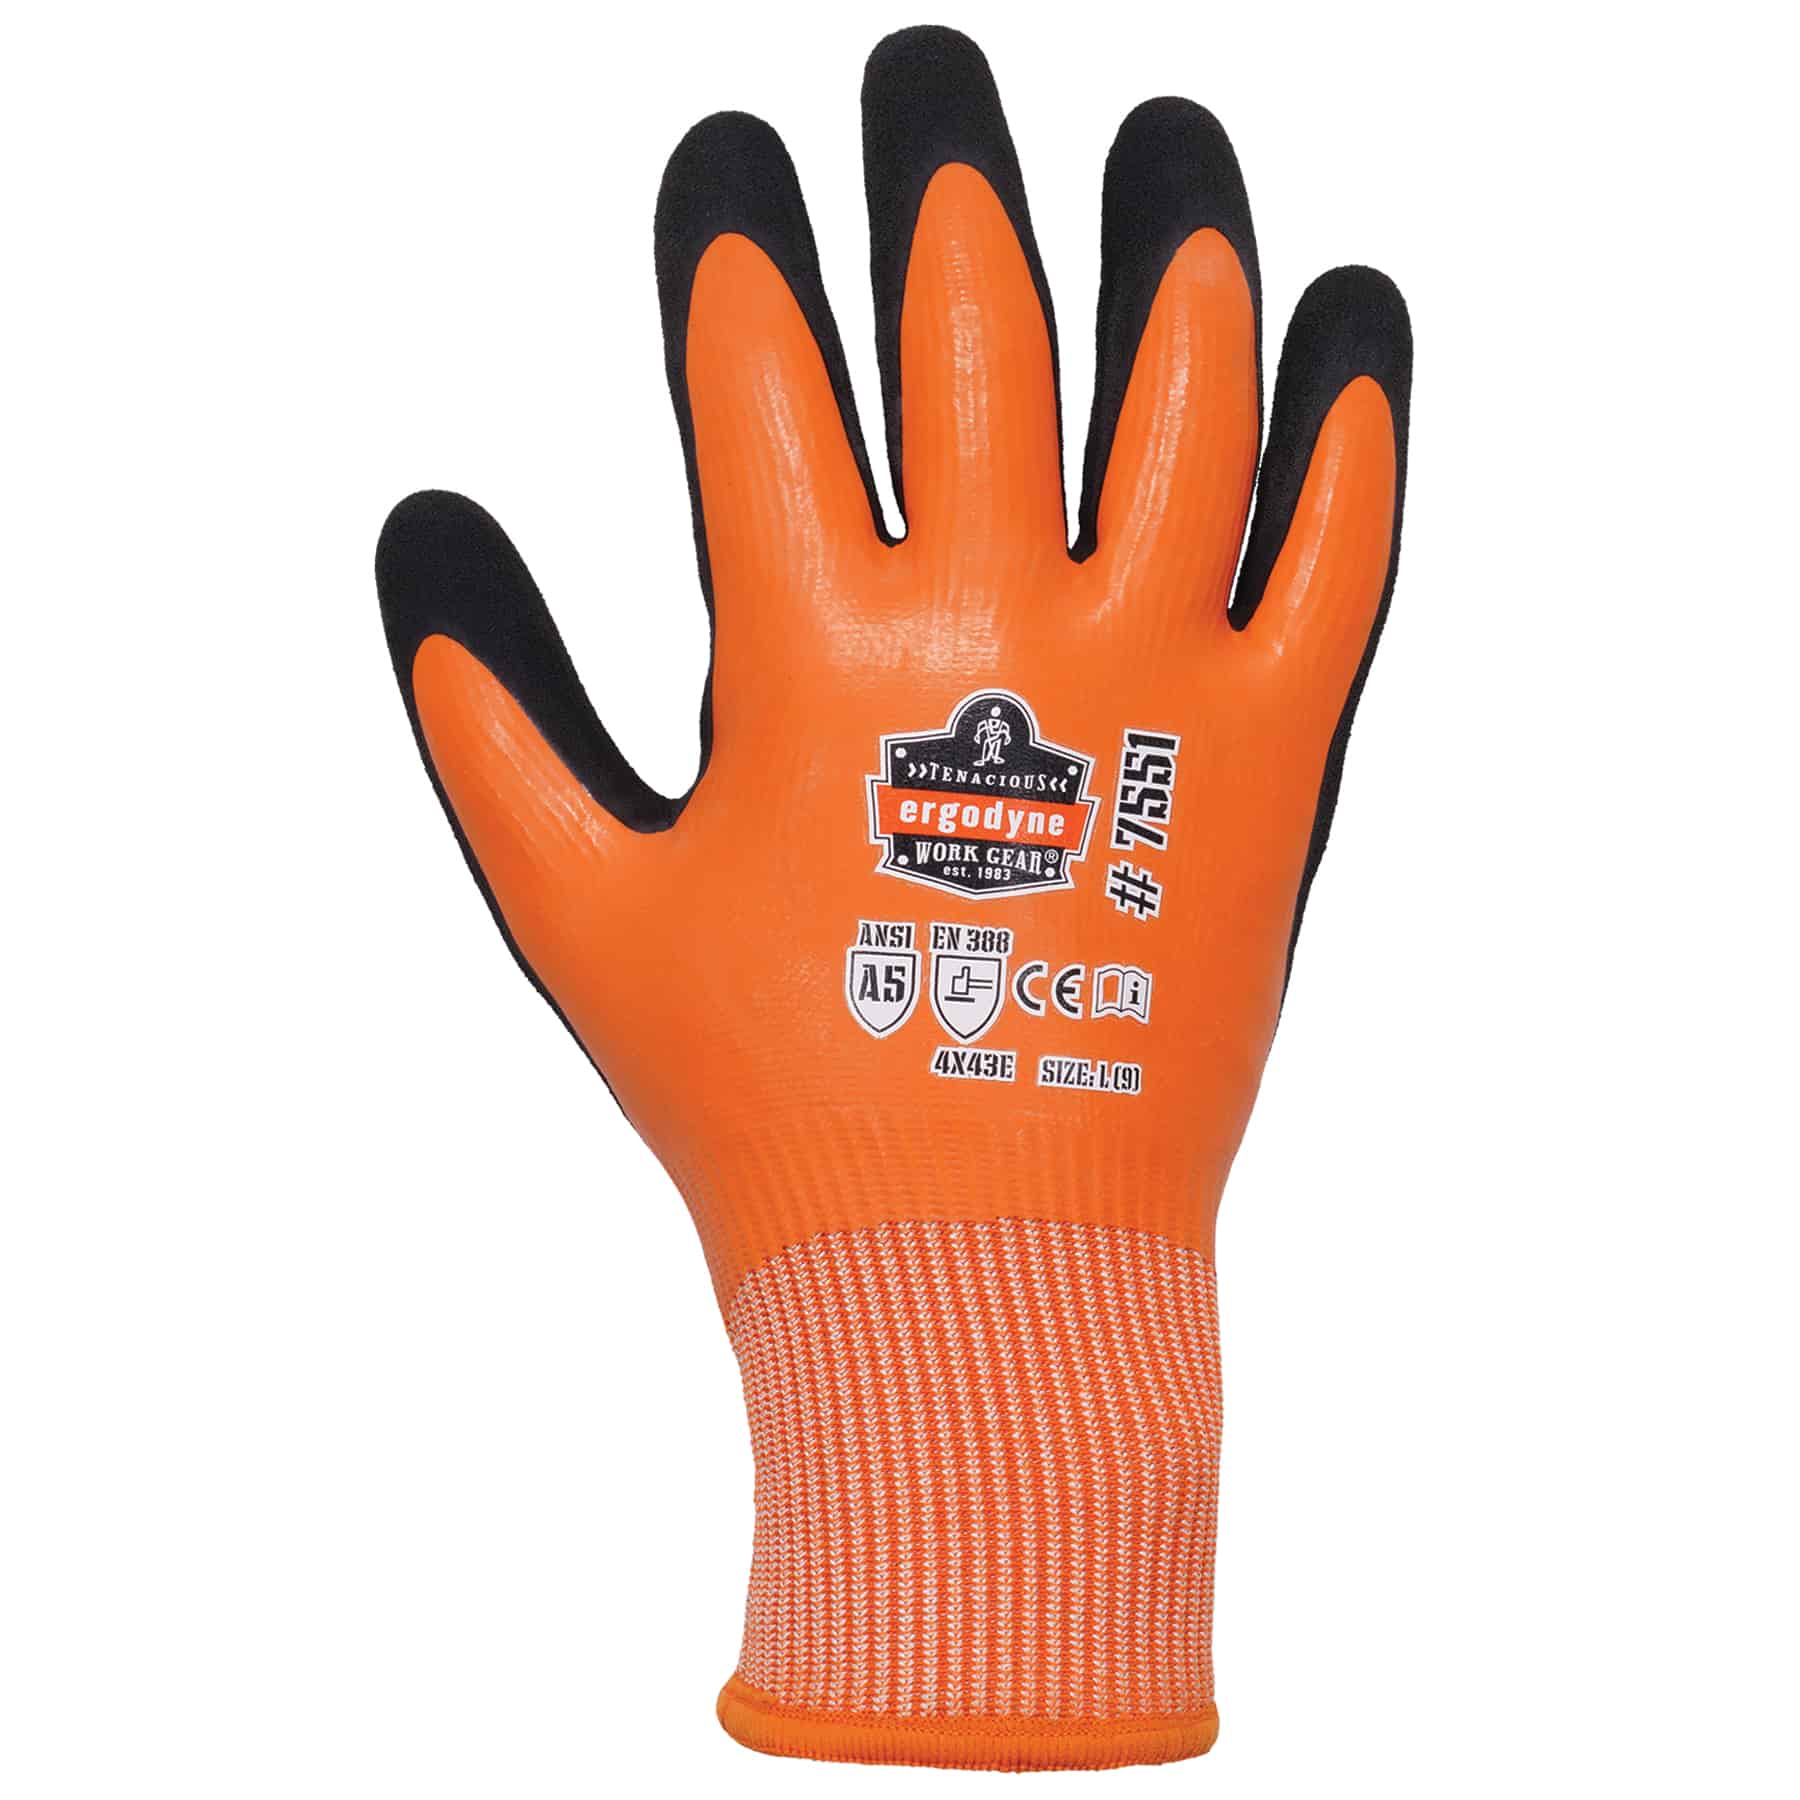  KANGLONGDA Waterproof Winter Work Gloves for Men and